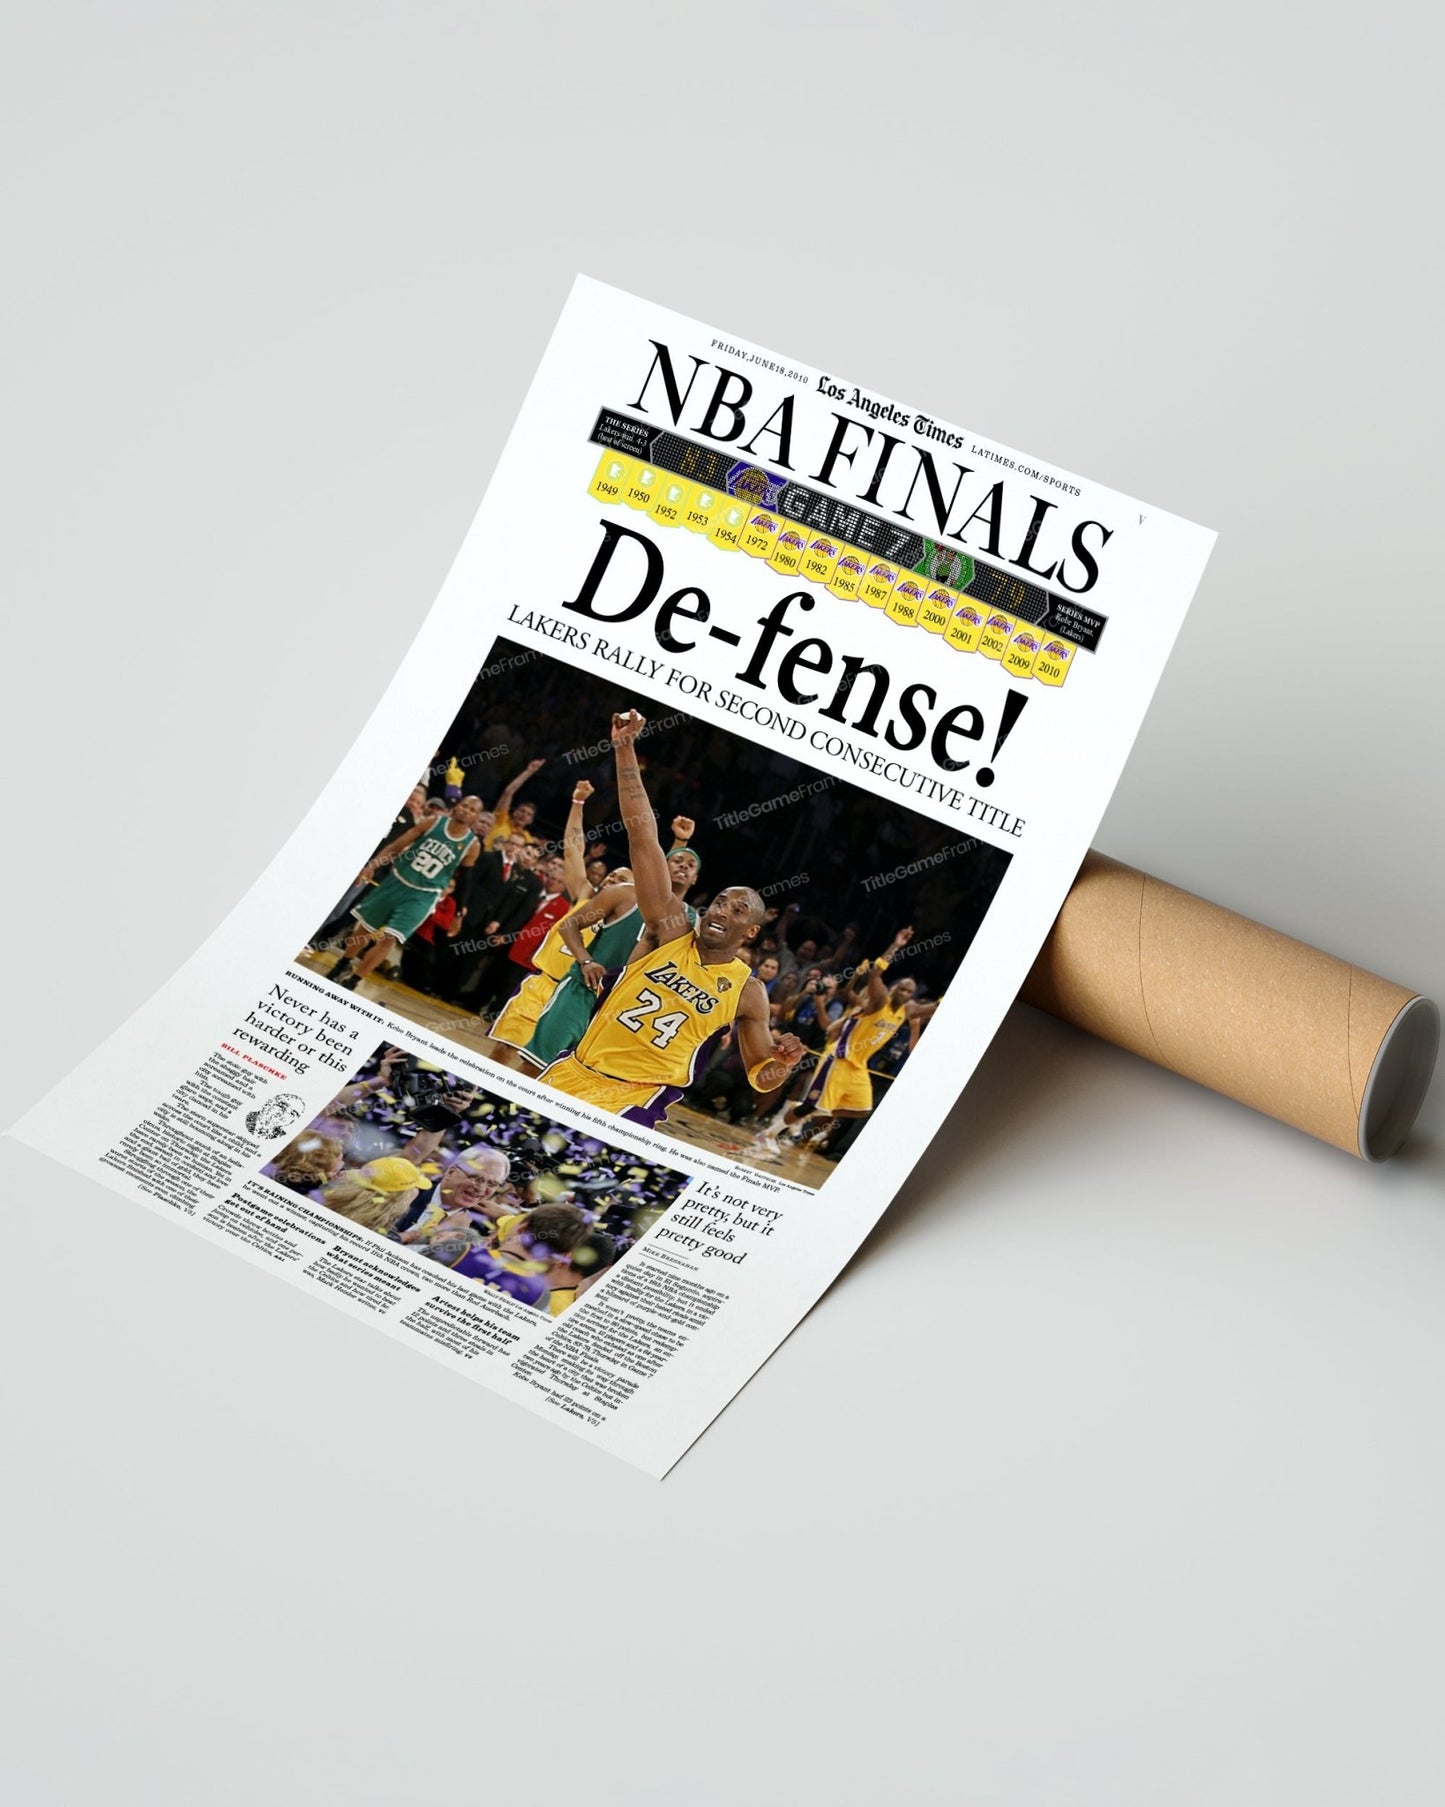 2010 Los Angeles LA Lakers NBA Championship Framed Print LA Times Newspaper Front Cover Kobe Bryant Staples Center - Title Game Frames